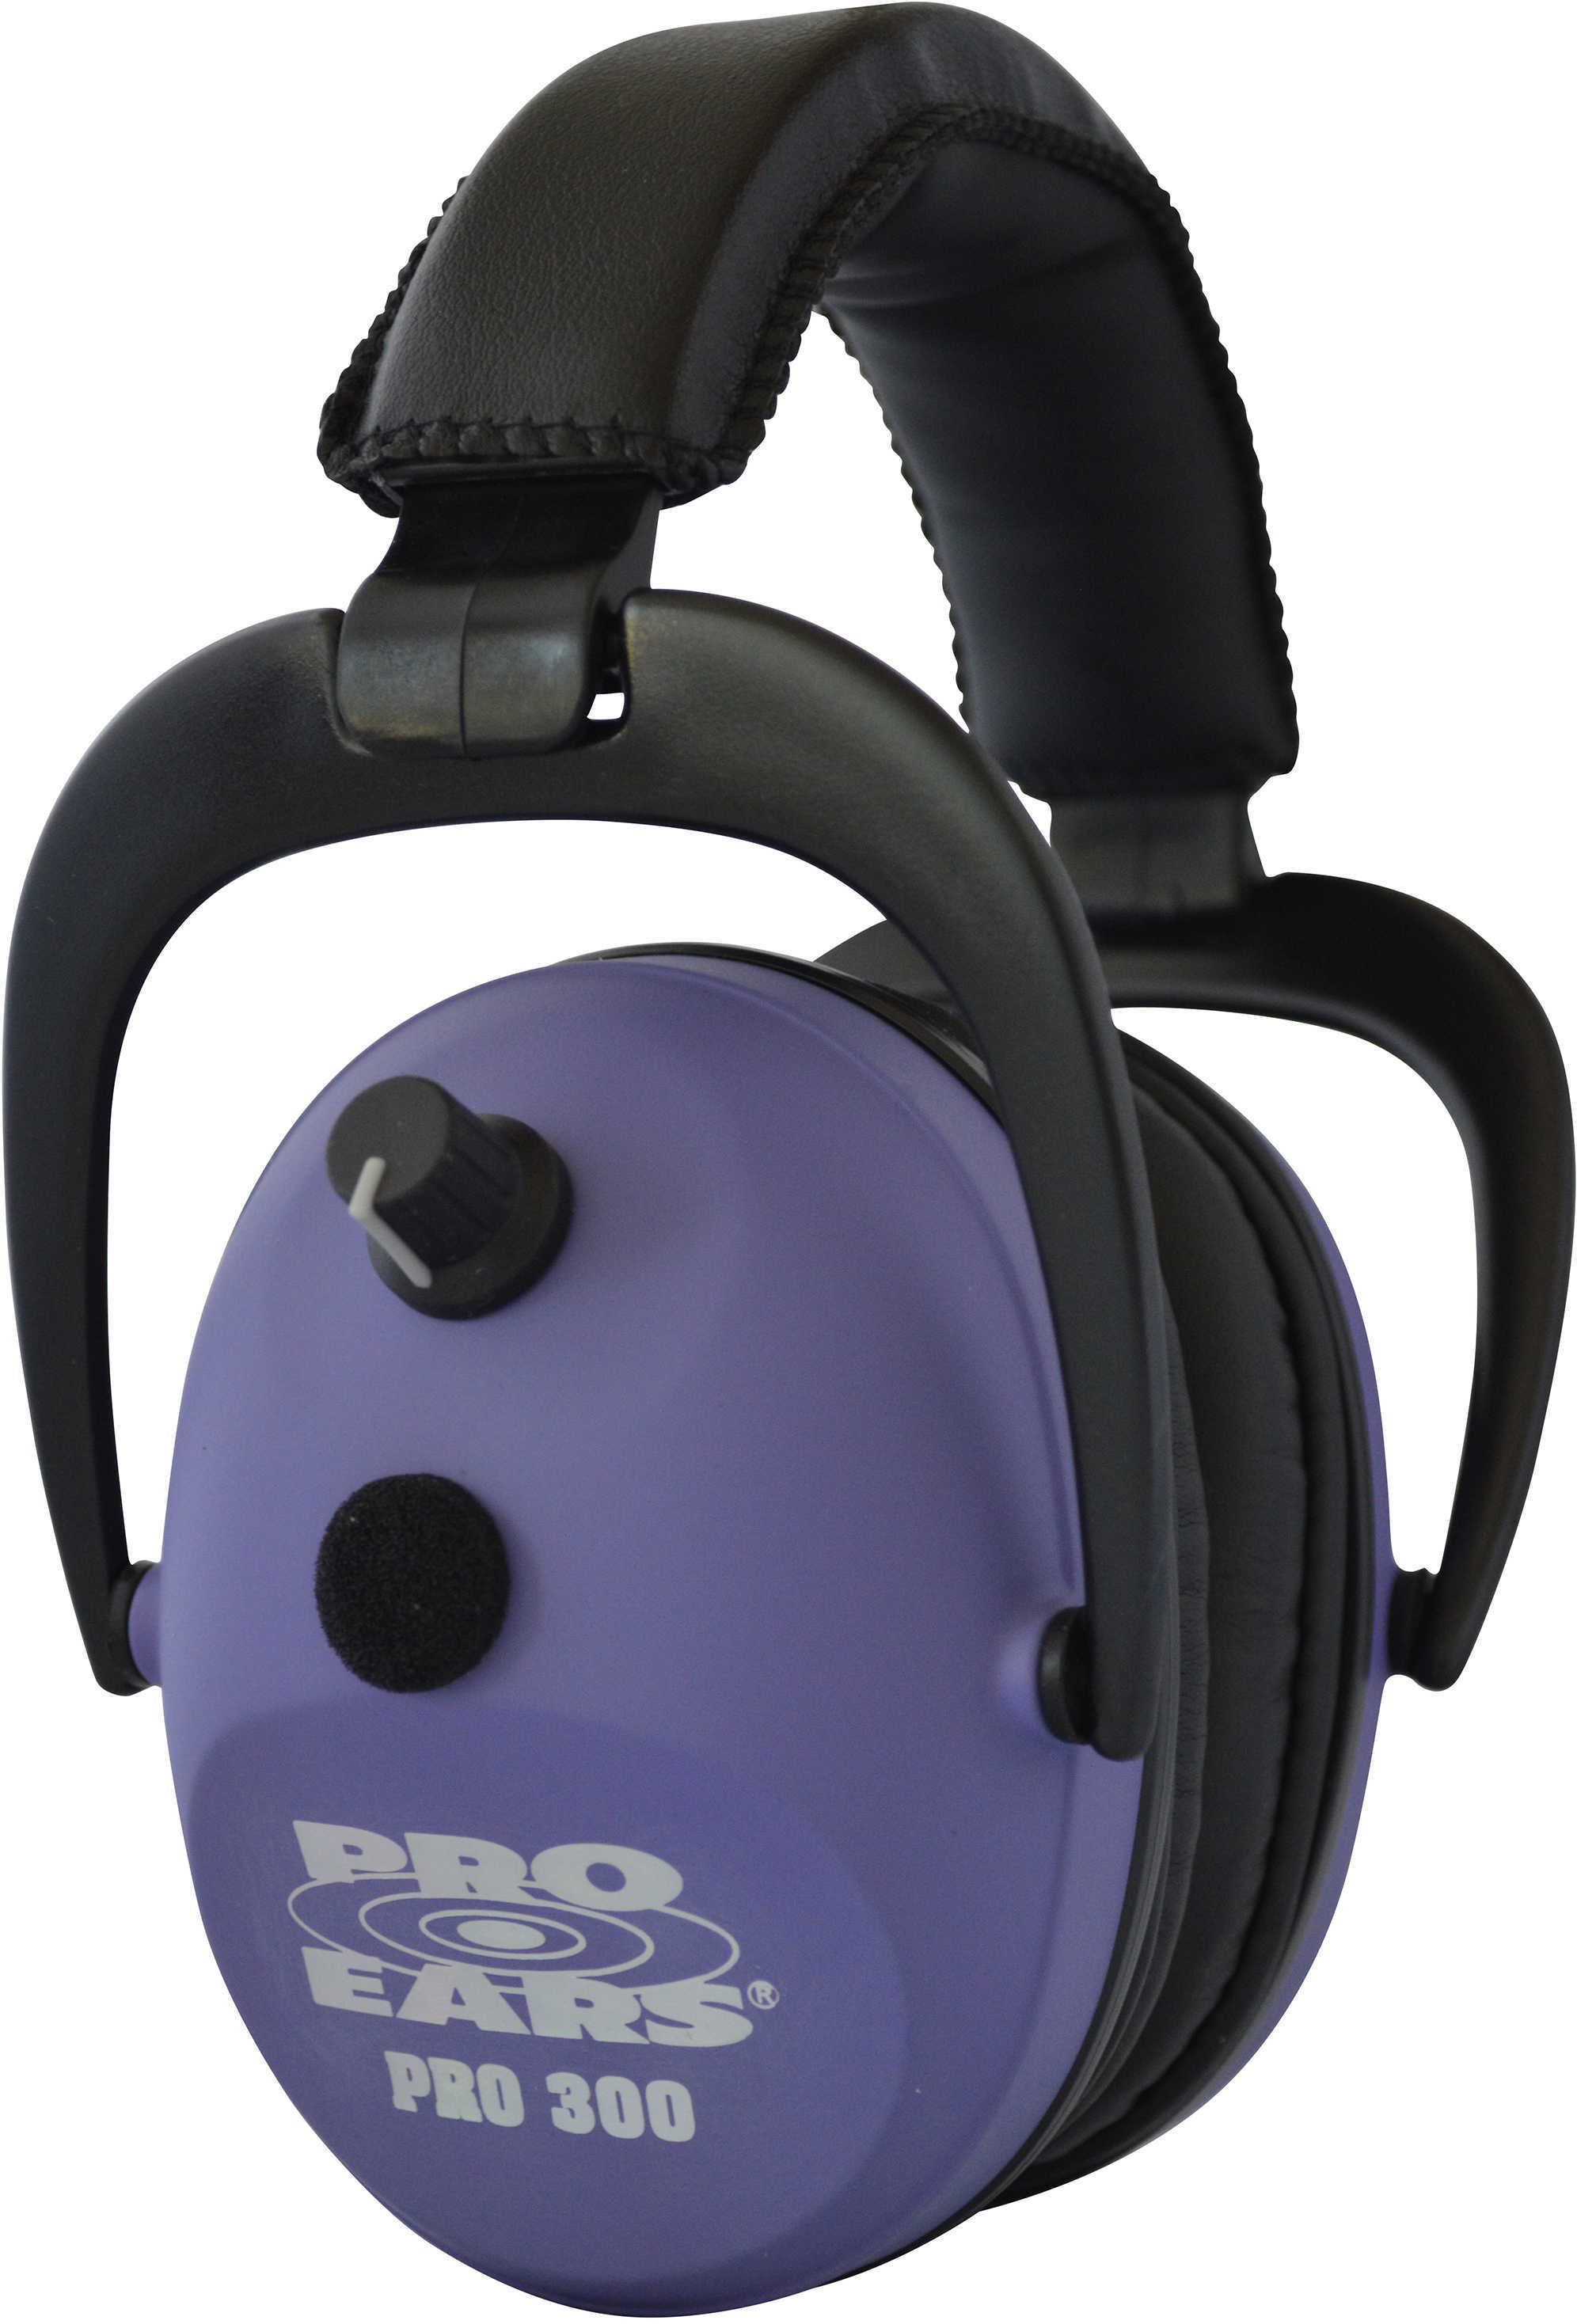 Pro Ears 300 Noise Reduction Rating 26 Decibel Purple